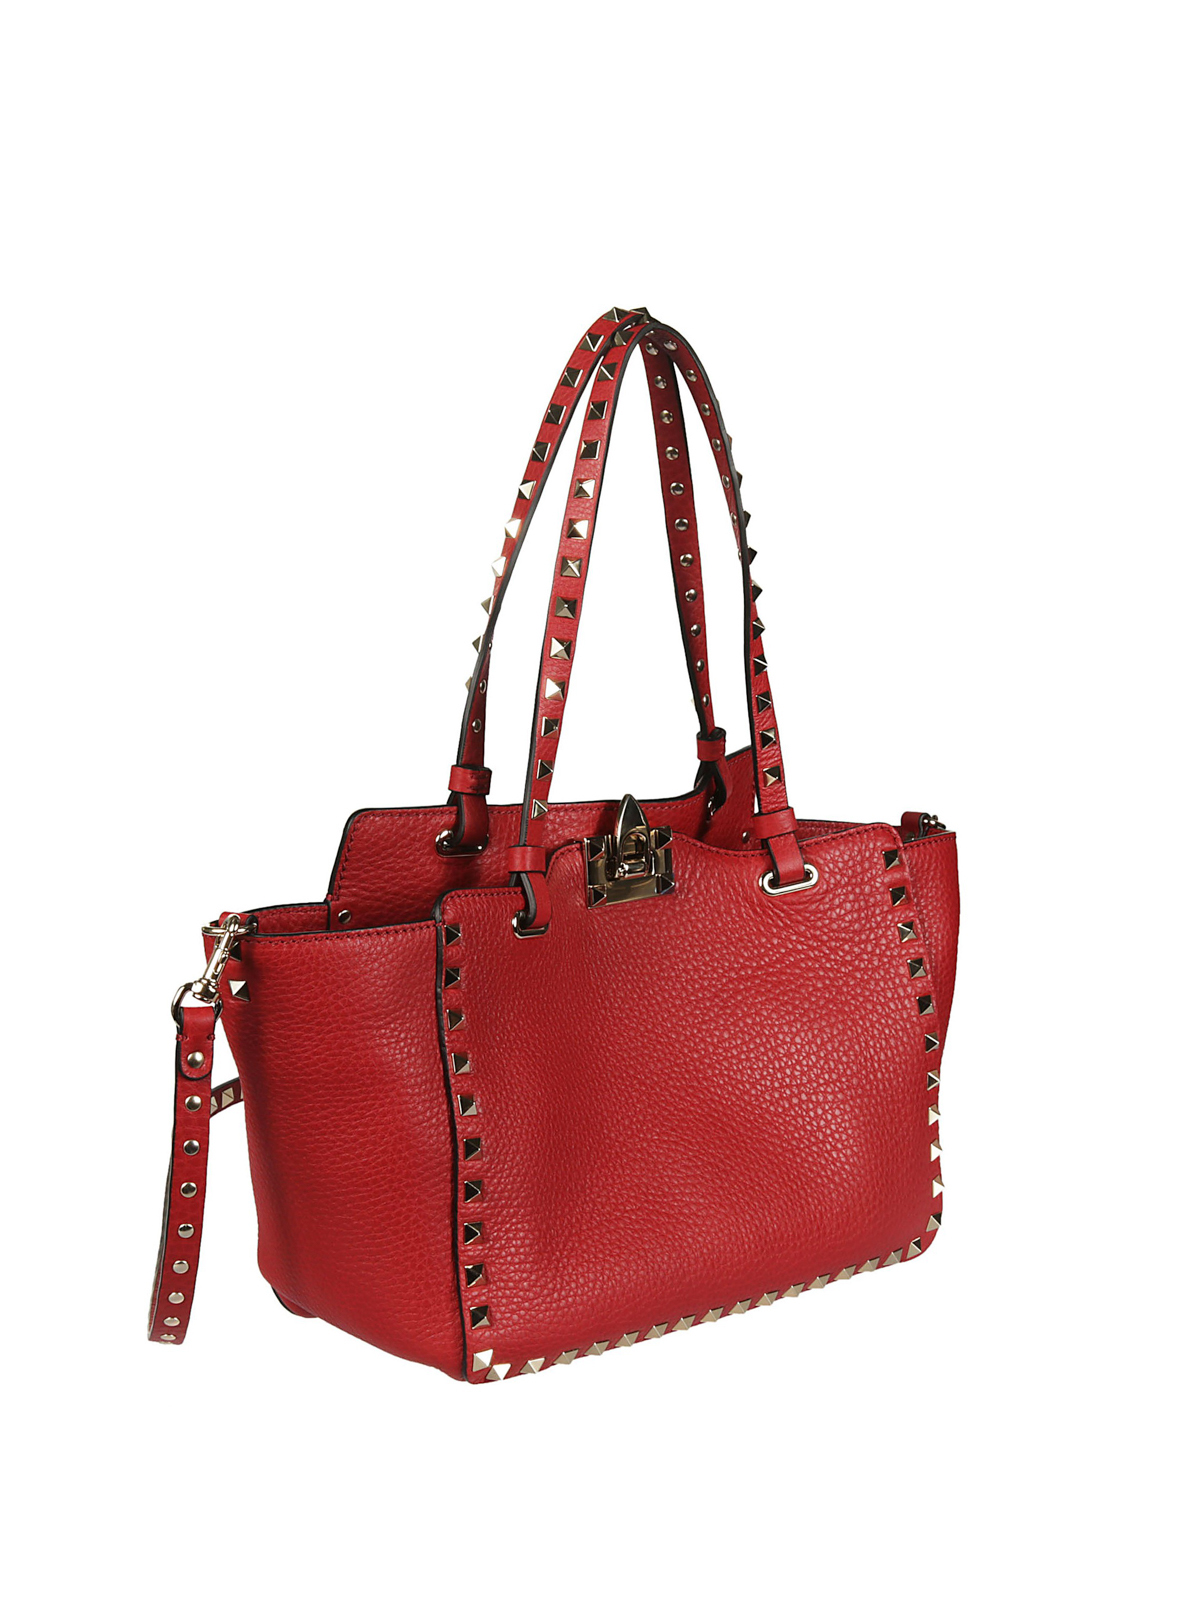 Red Valentino Stud Bag